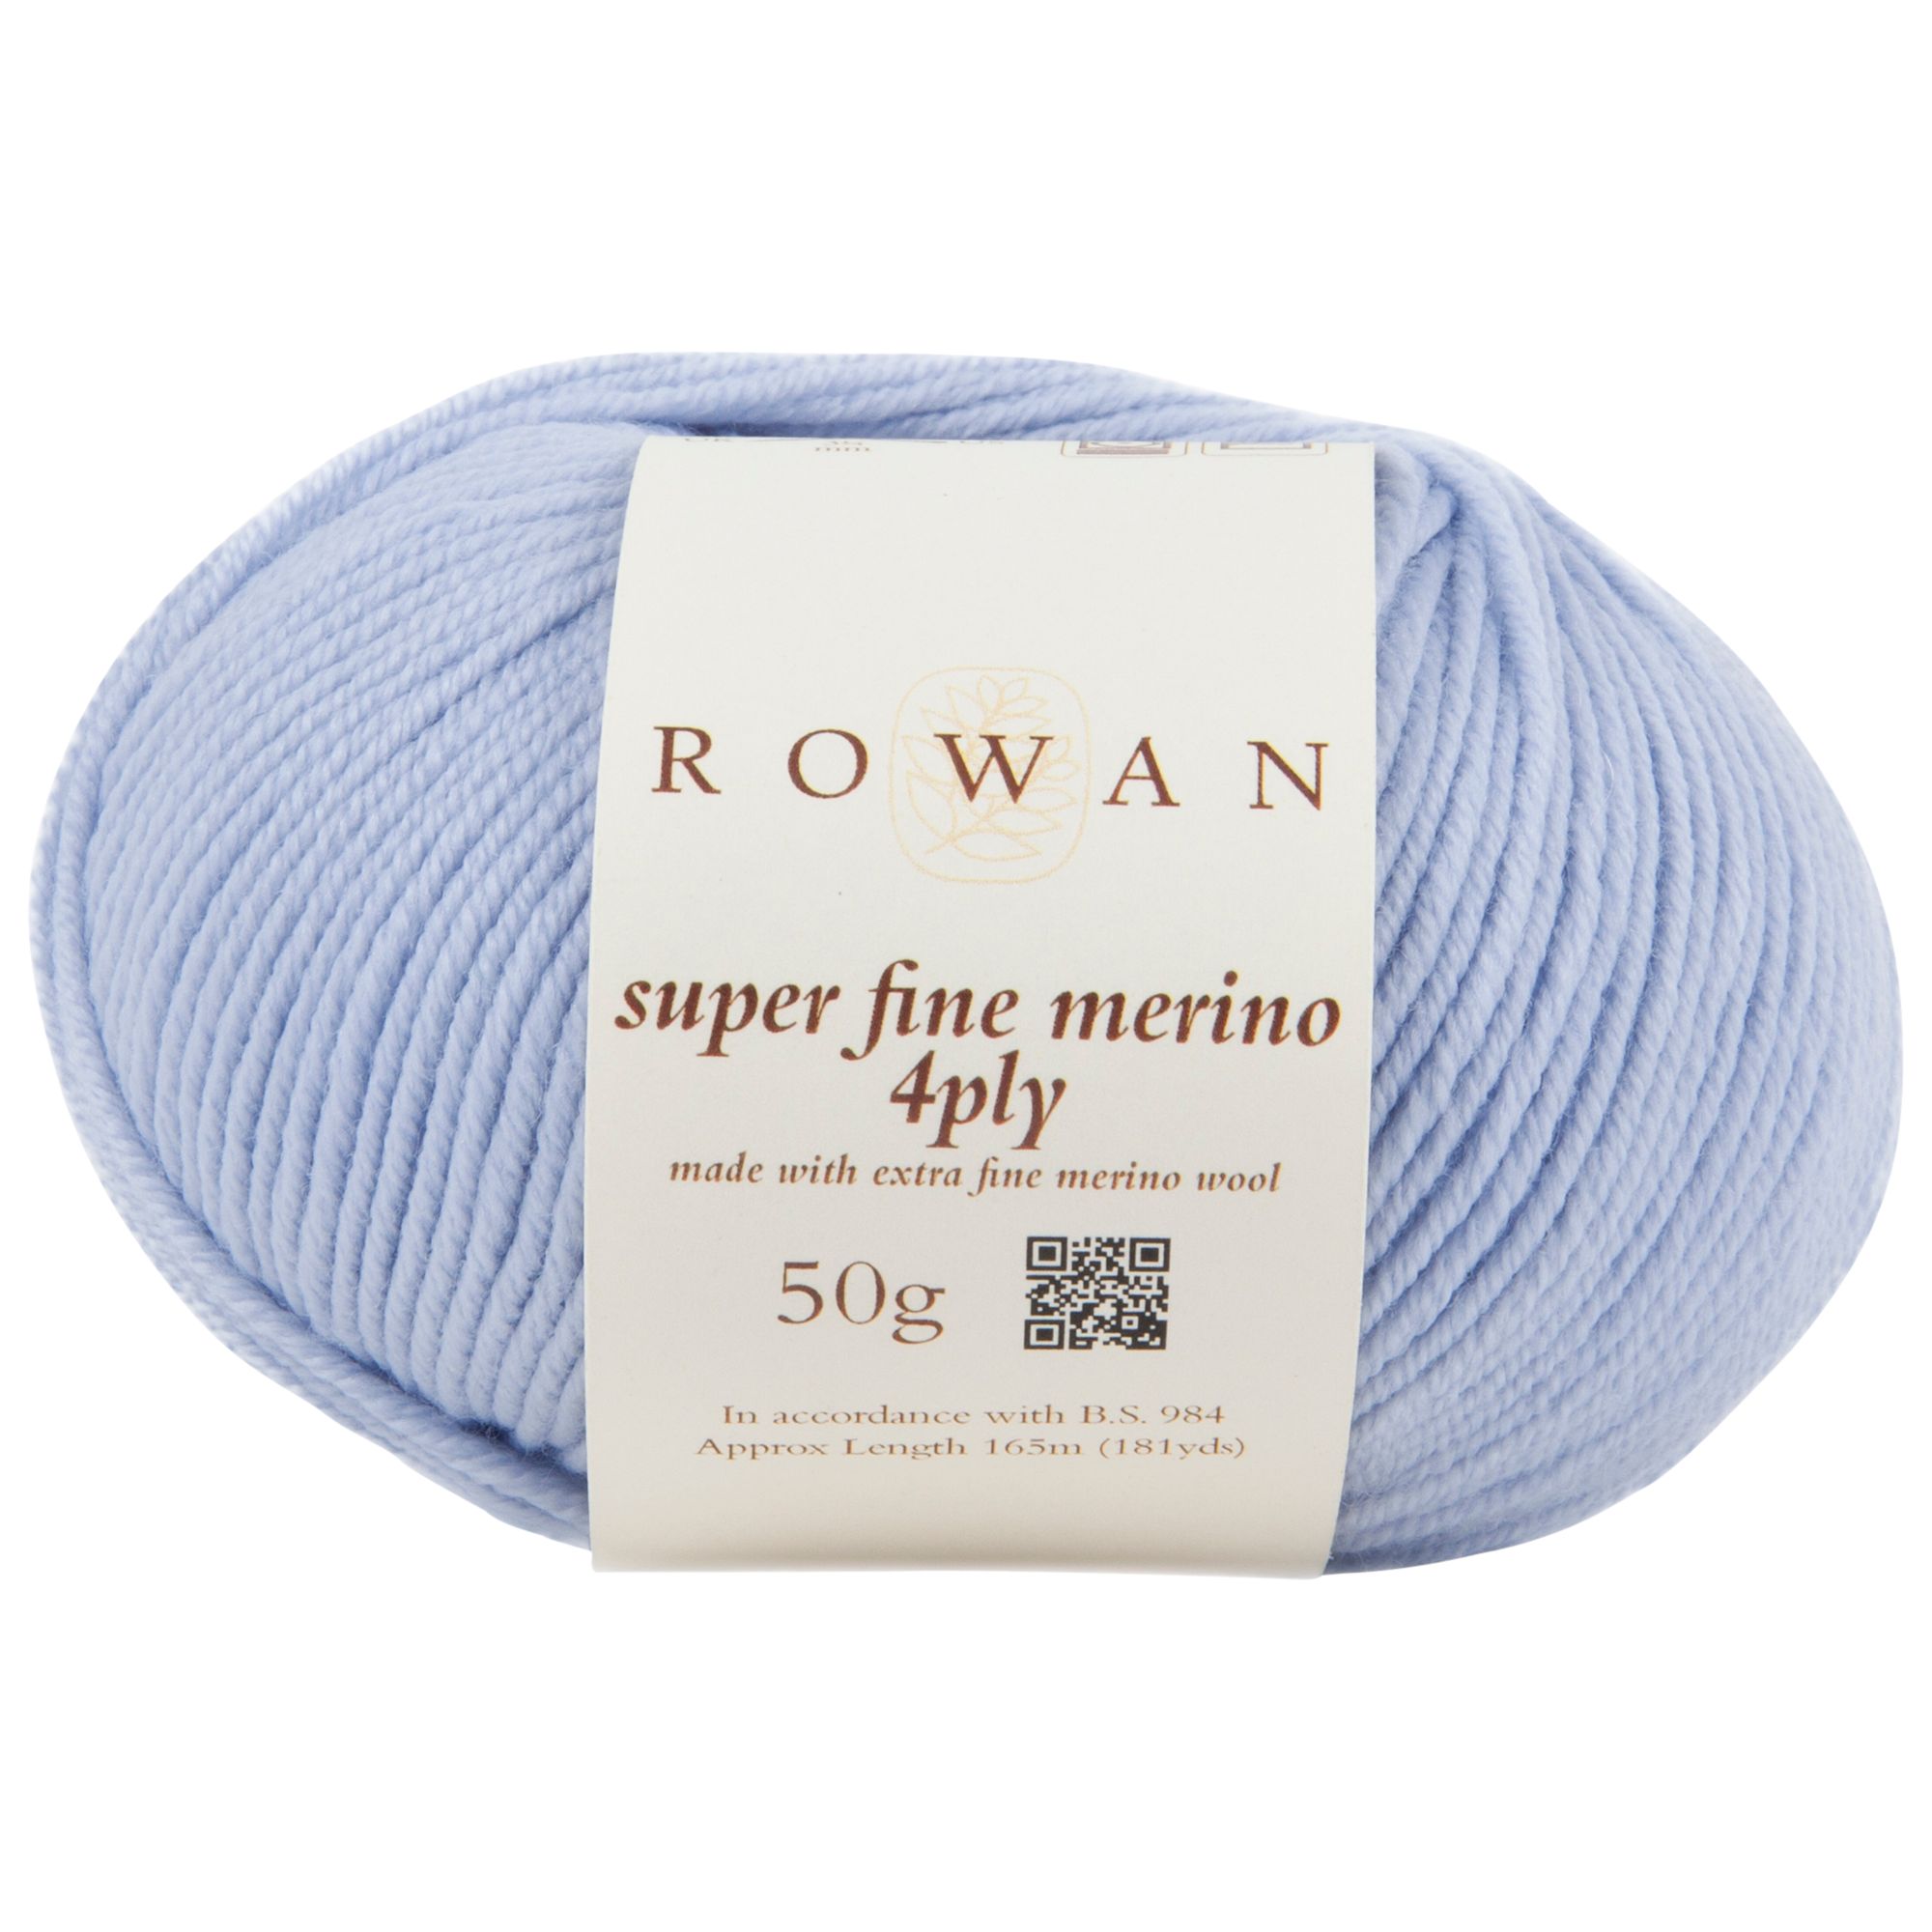 Rowan Super Fine Merino 4 Ply Yarn, 50g